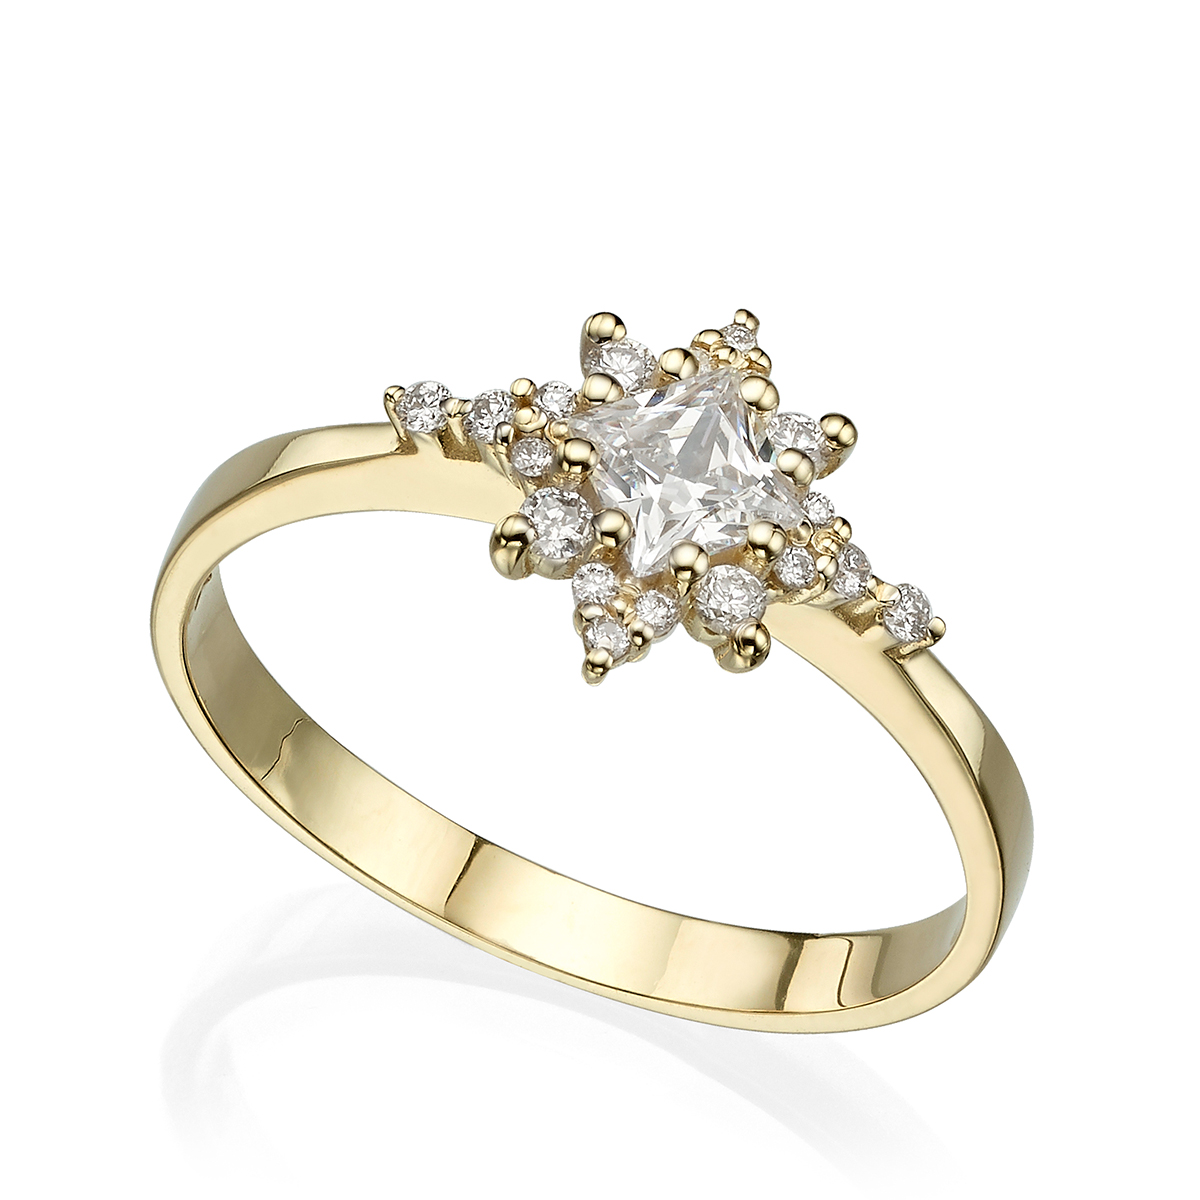 Unique Princess Cut Diamond Ring